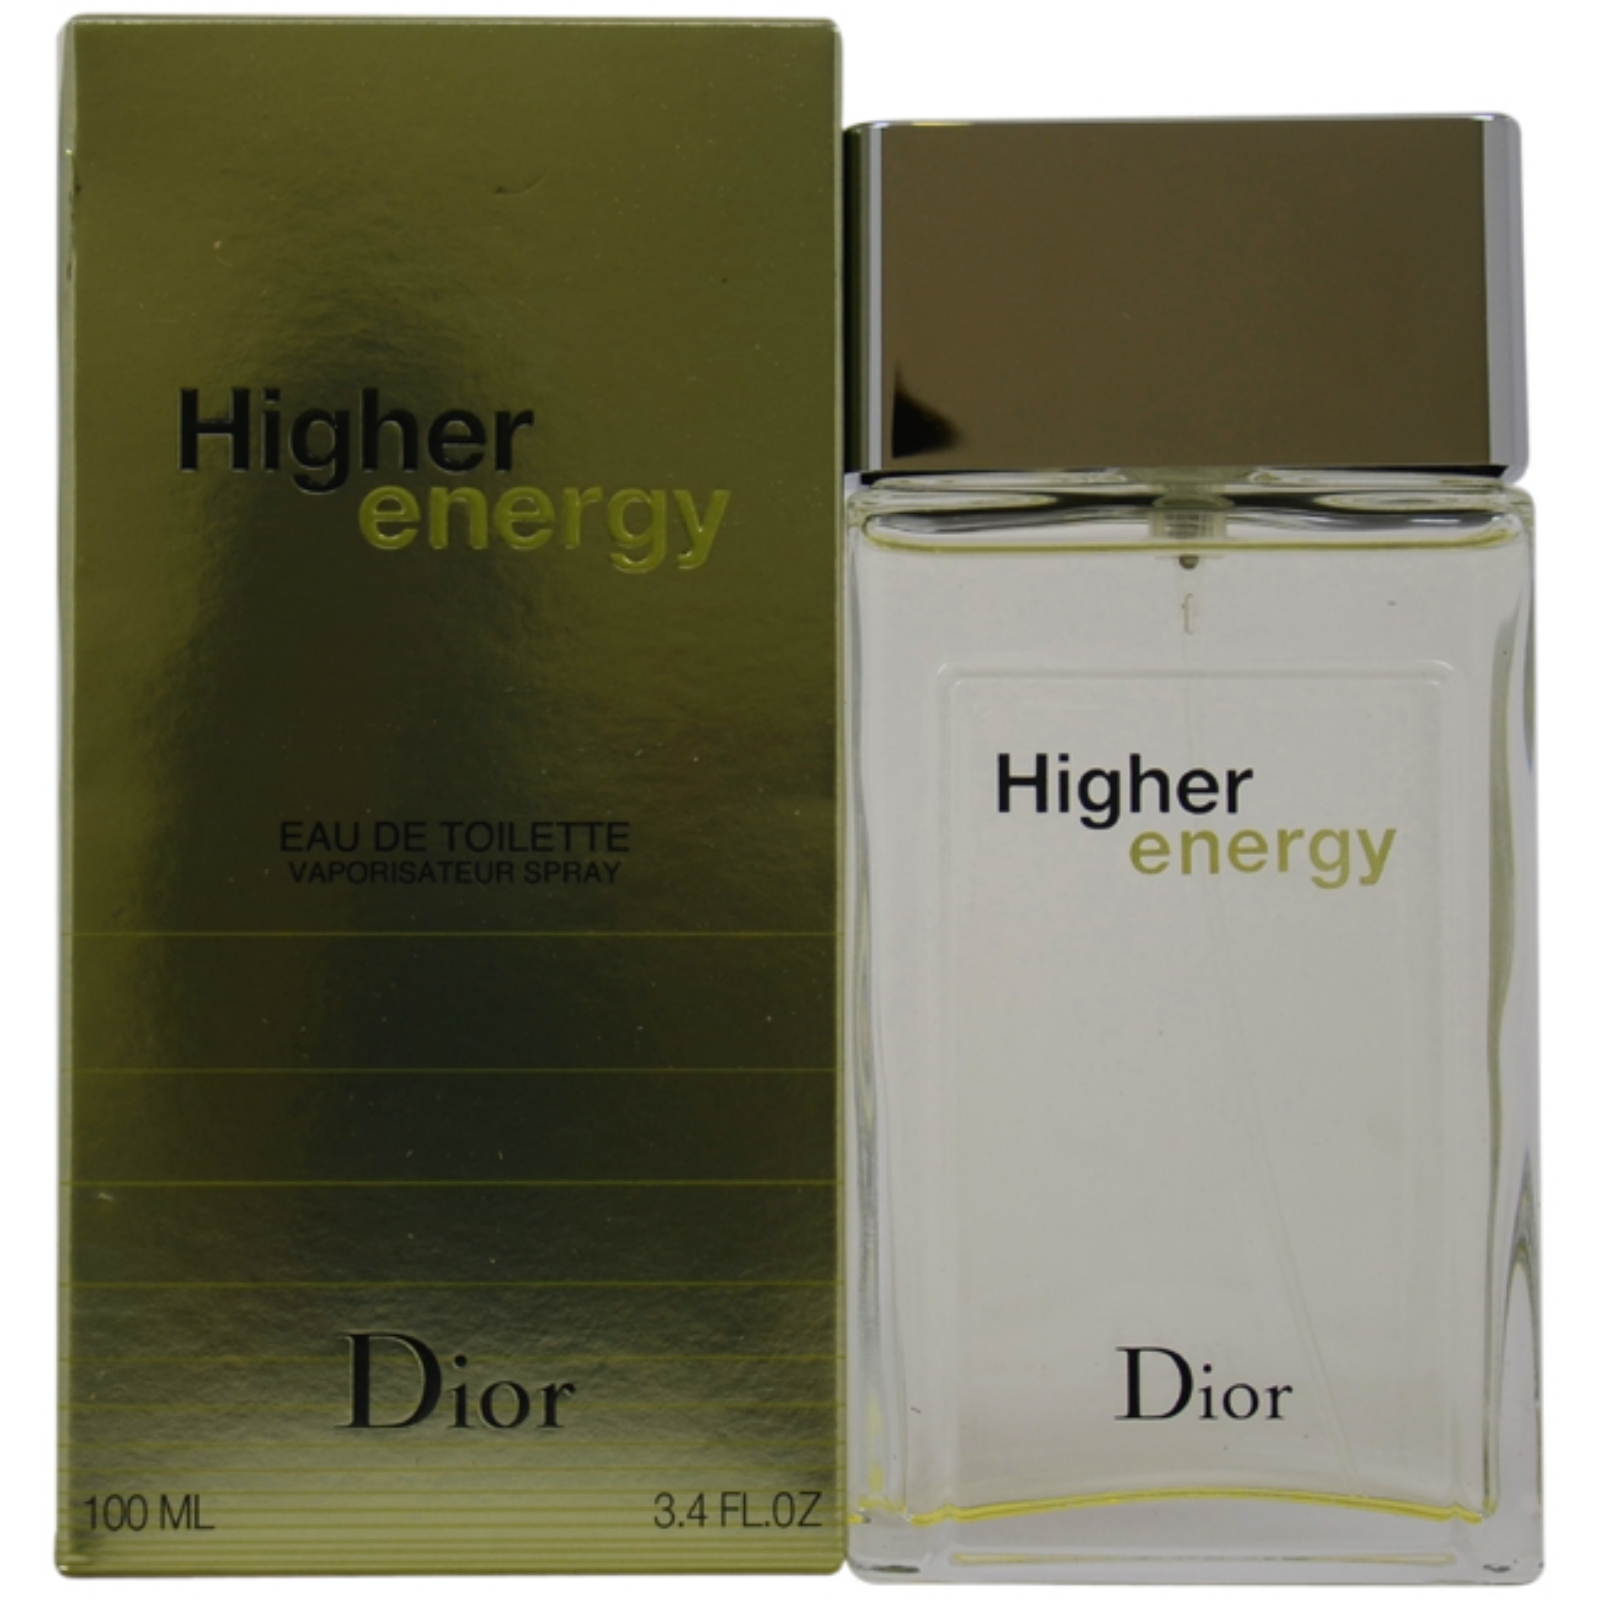 dior energy higher